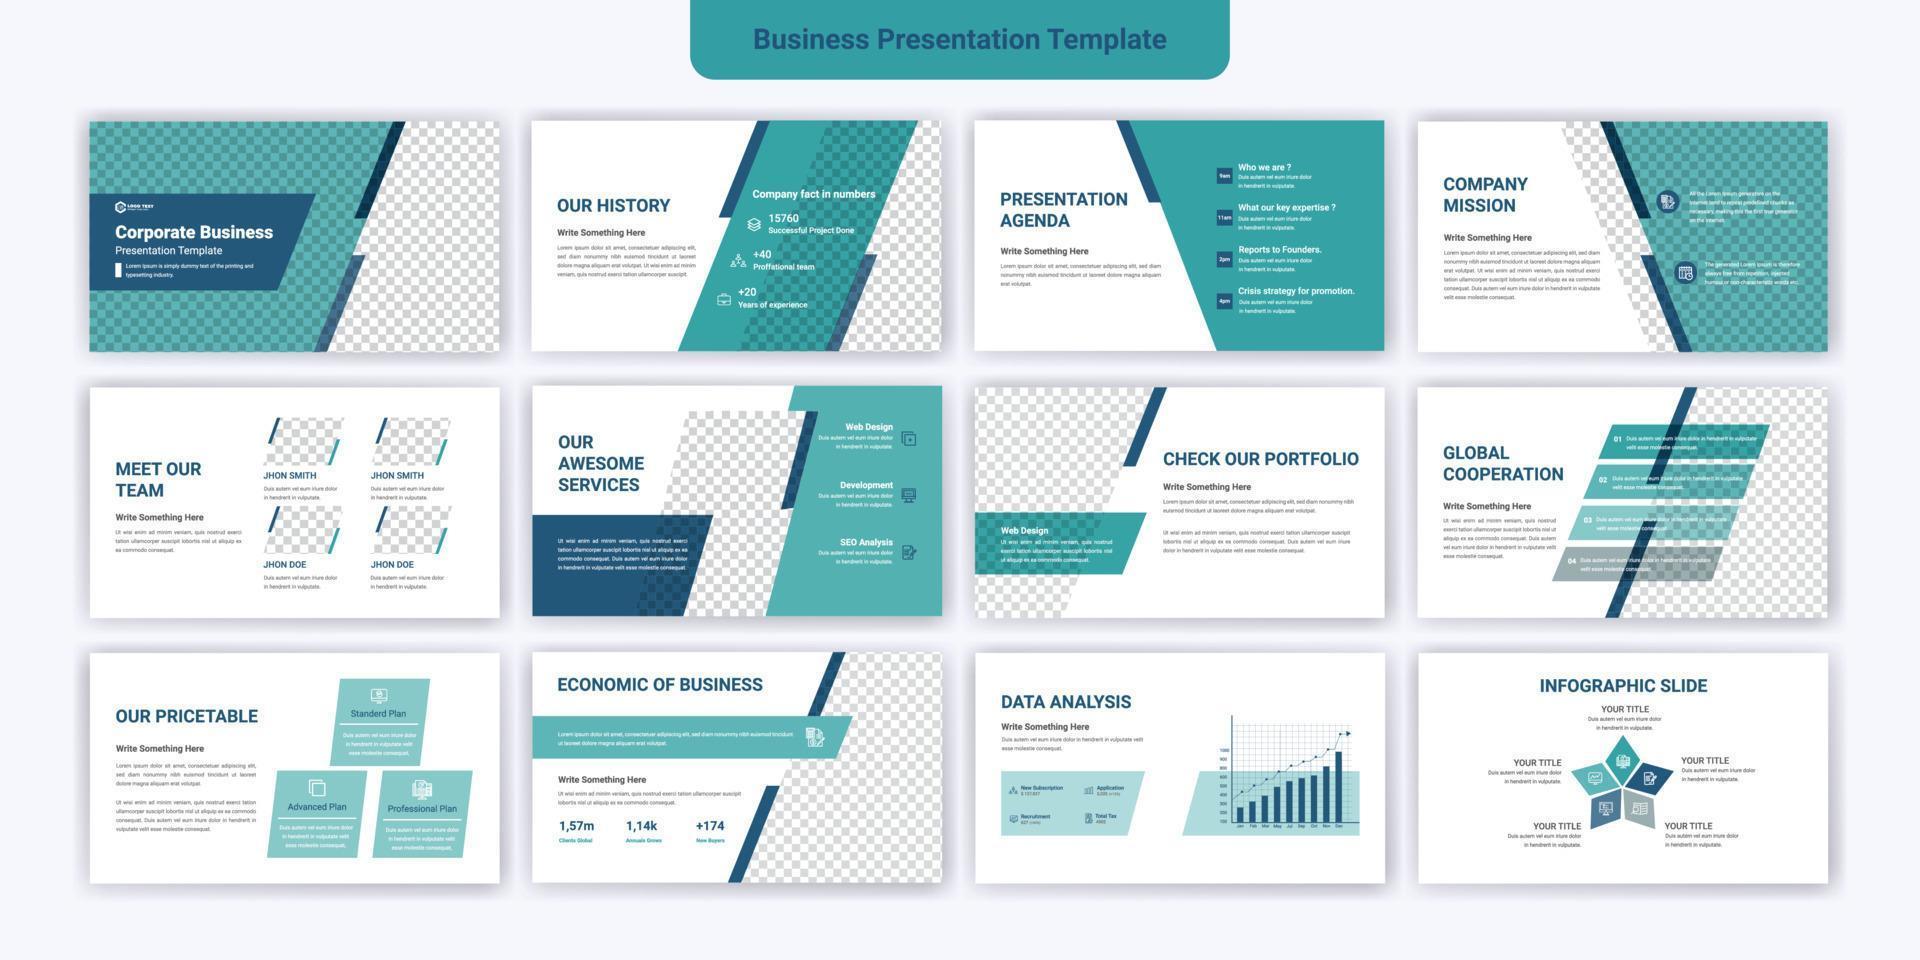 Corporate Business Presentation Template vector